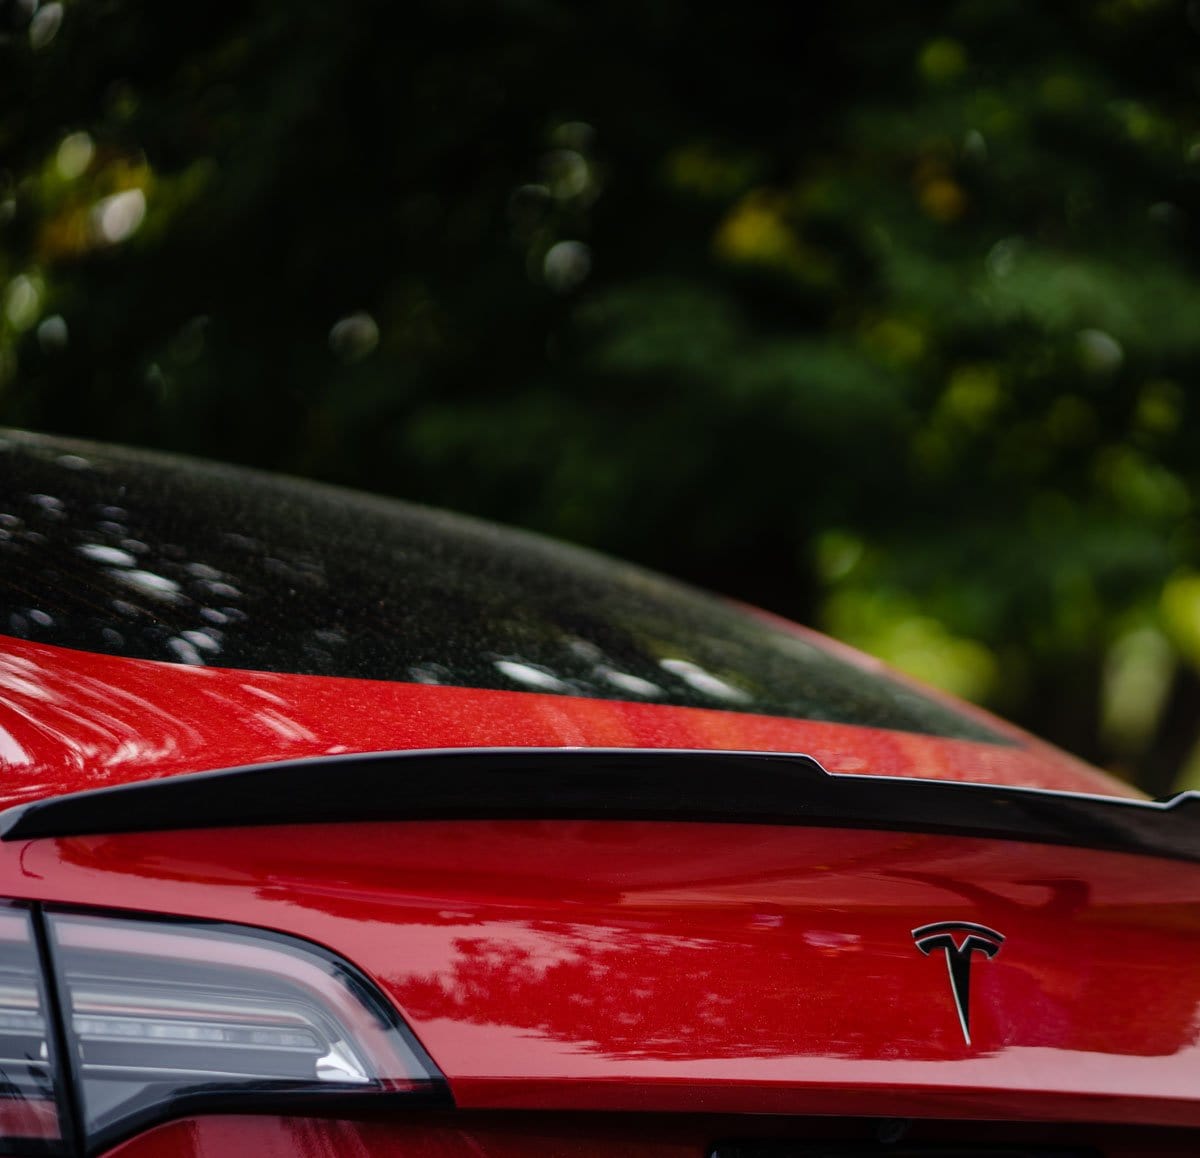 ACS Composite M3 Spoiler for Tesla Model 3, Gloss Black finish, SKU 51-4-001, rear view of spoiler on car trunk.